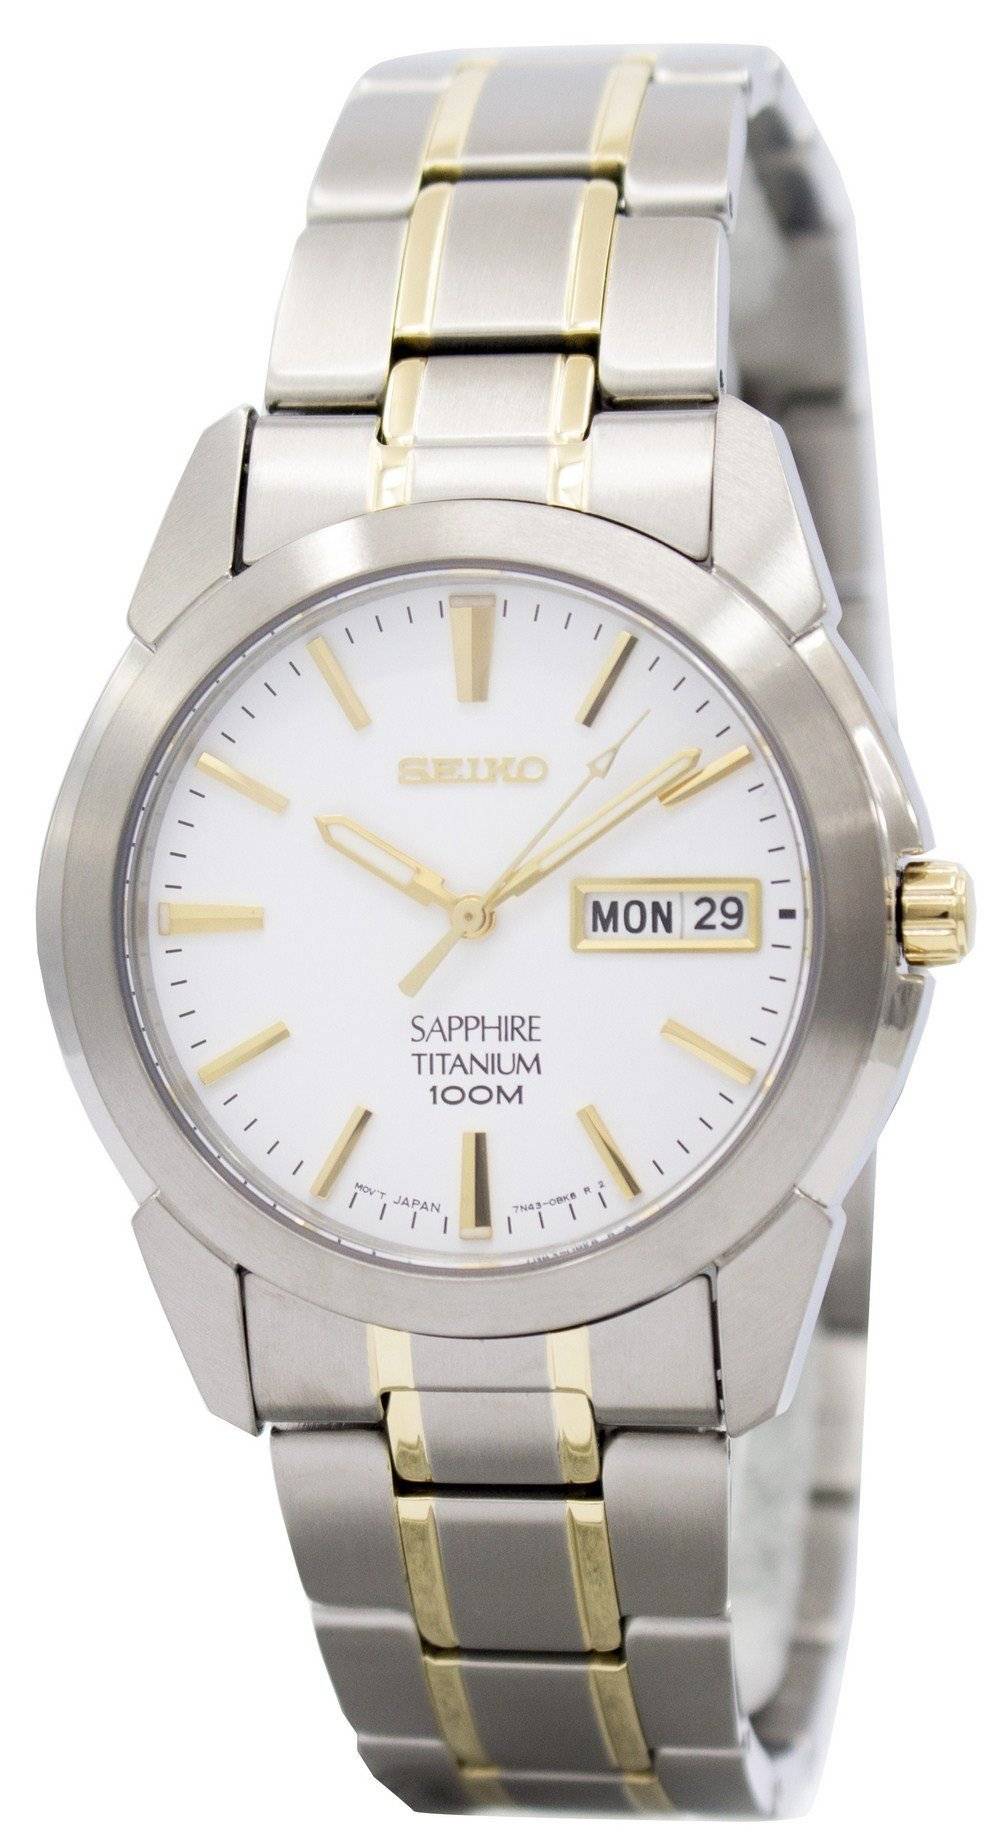 Đồng hồ đeo tay nam Seiko Titanium Sapphire SGG733 SGG733P1 SGG733P vi